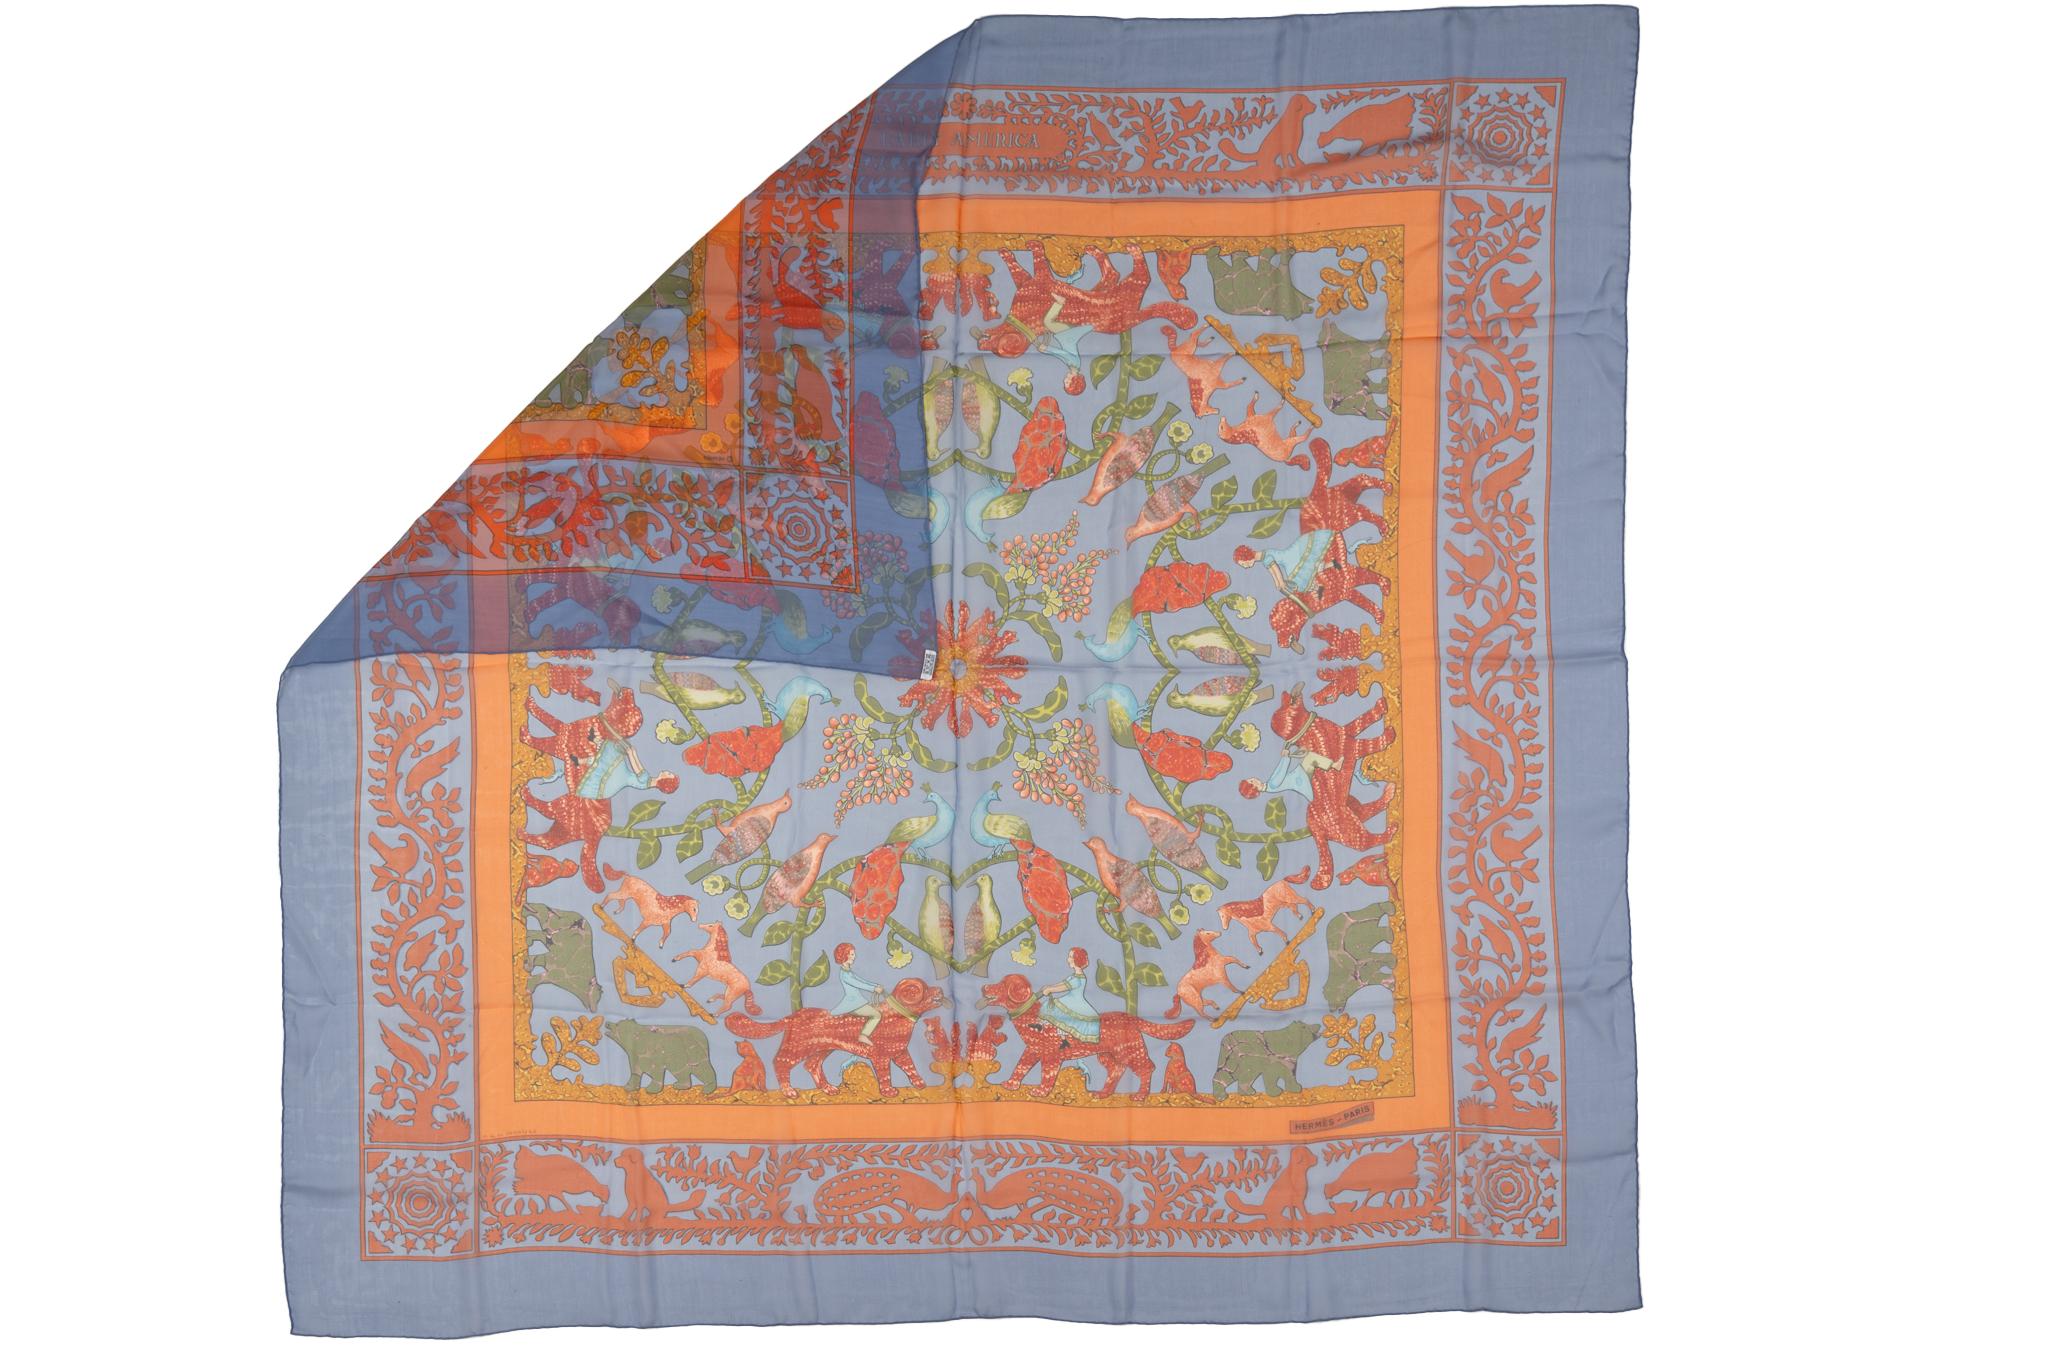 Hermès silk chiffon multicolor flower shawl with light blue trim. Excellent condition, hand rolled edges.
No box.